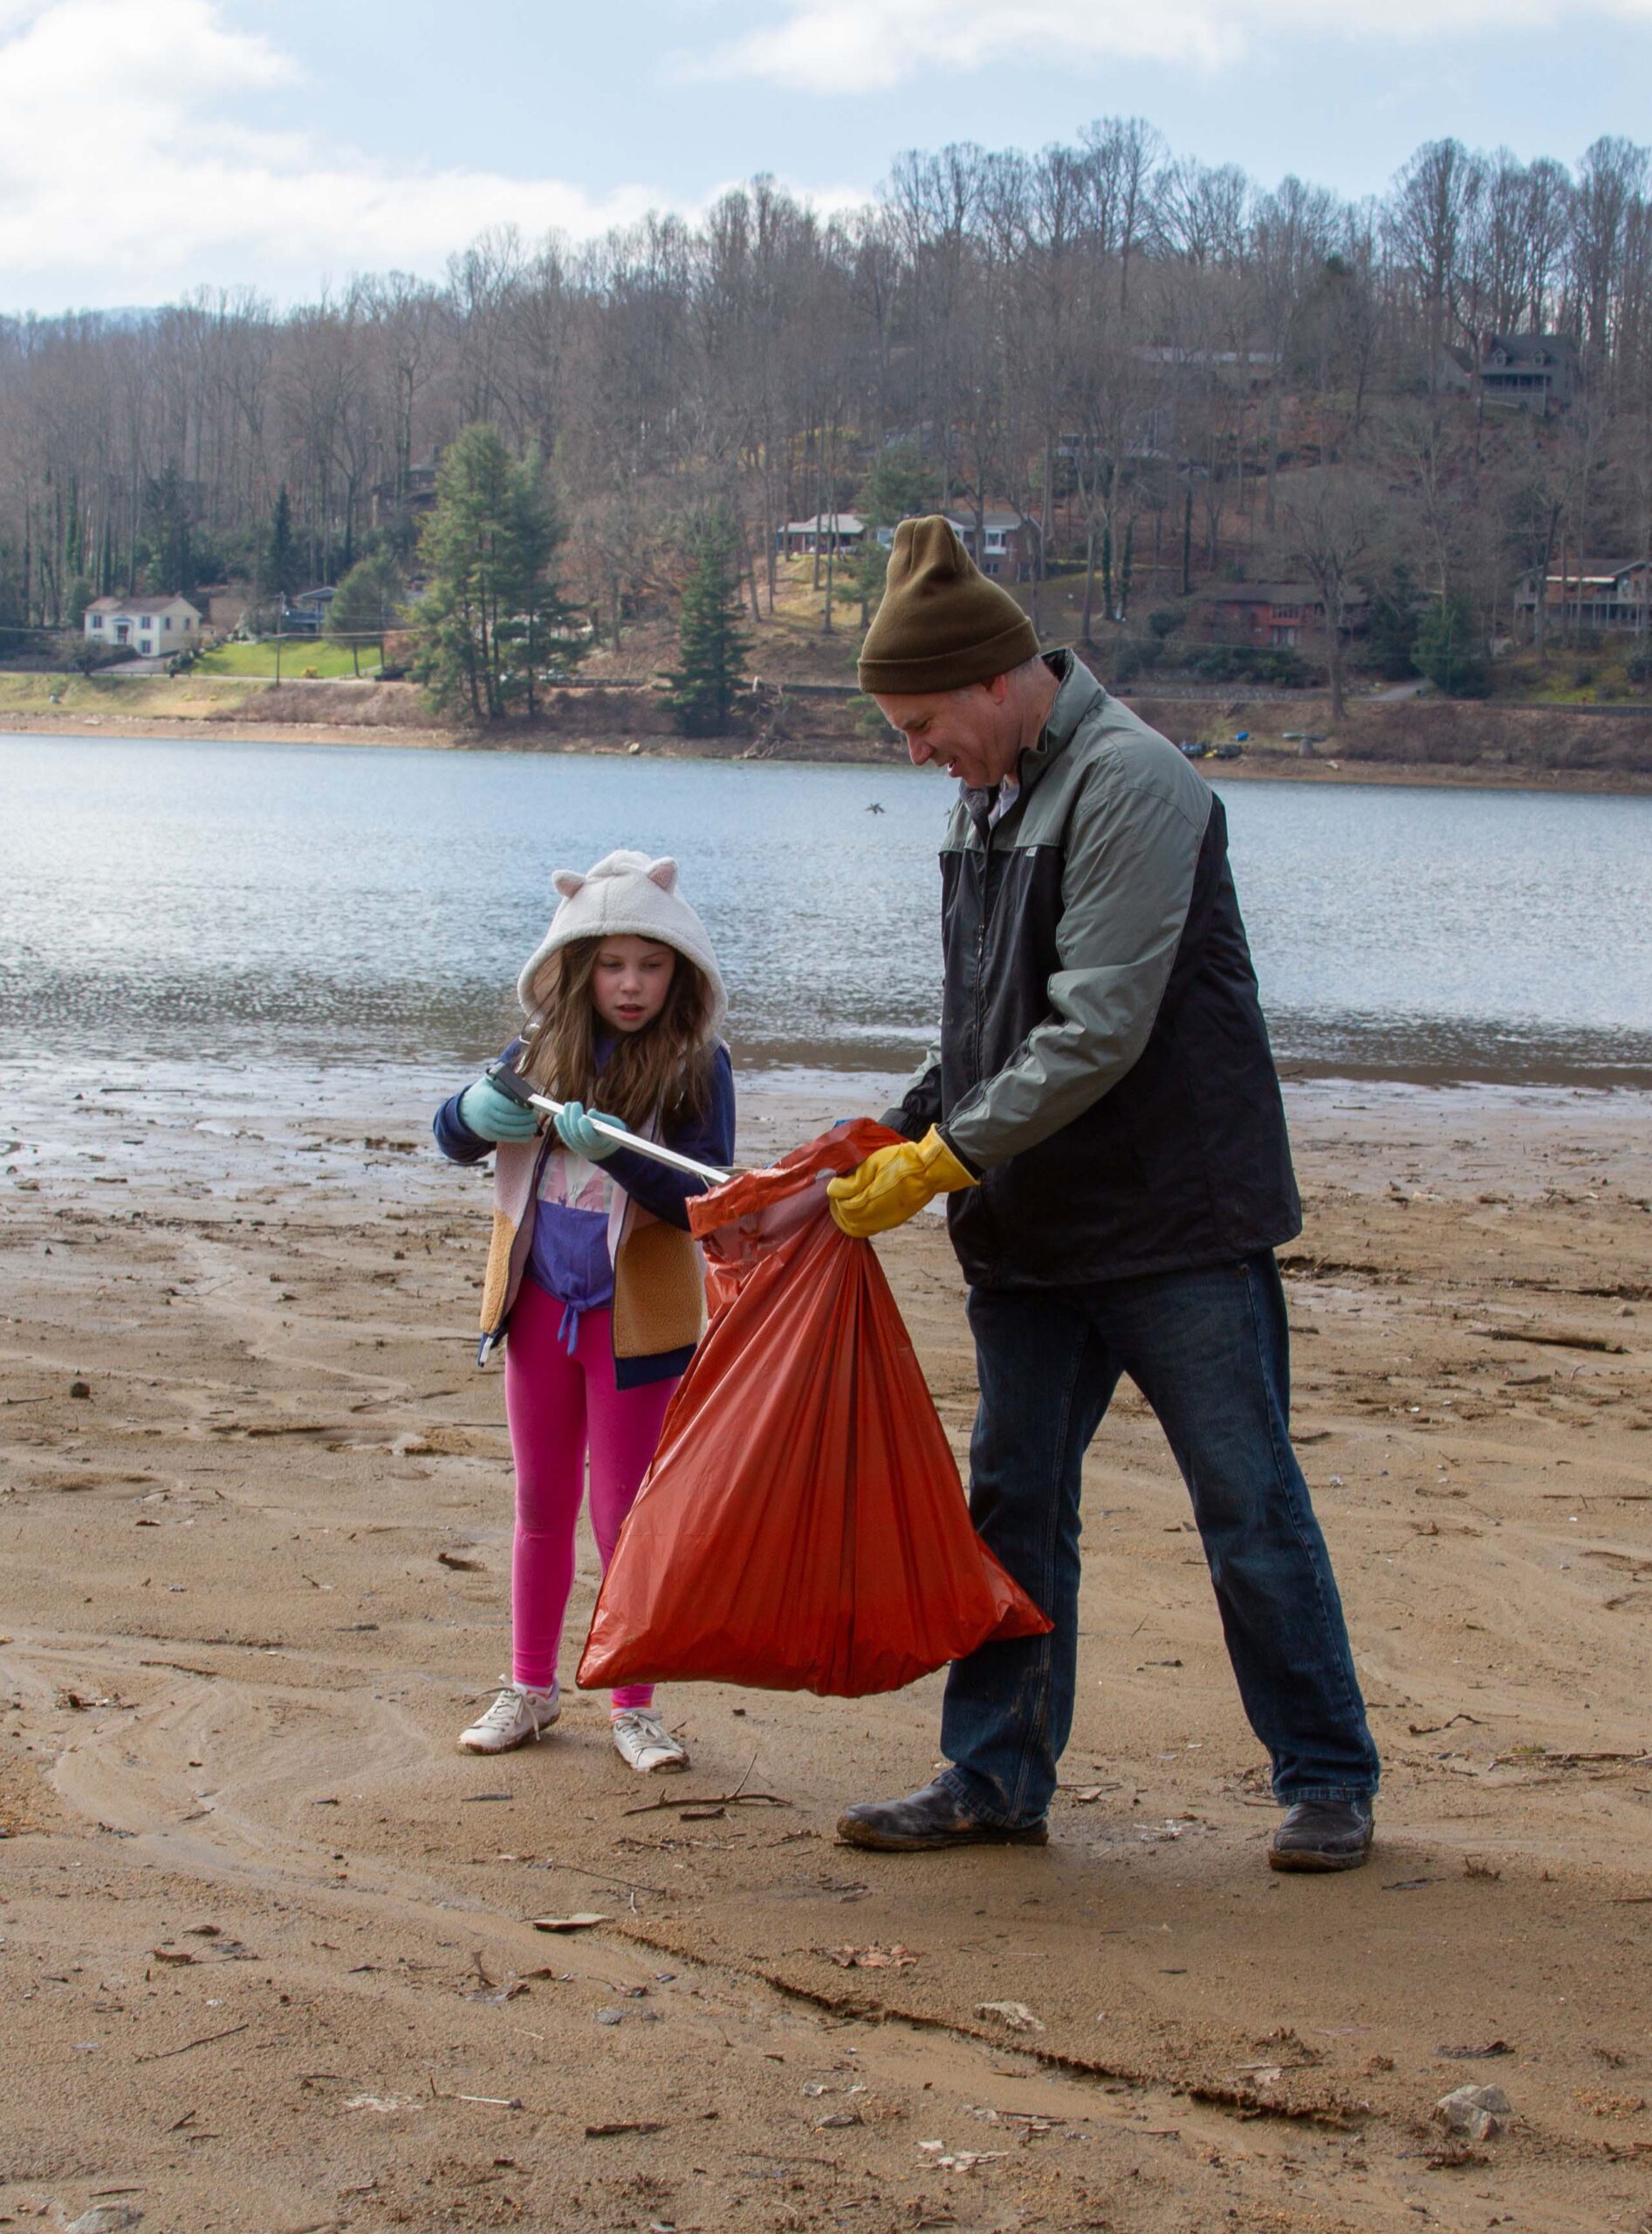 Lake clean up day volunteers pick up debris along the shoreline